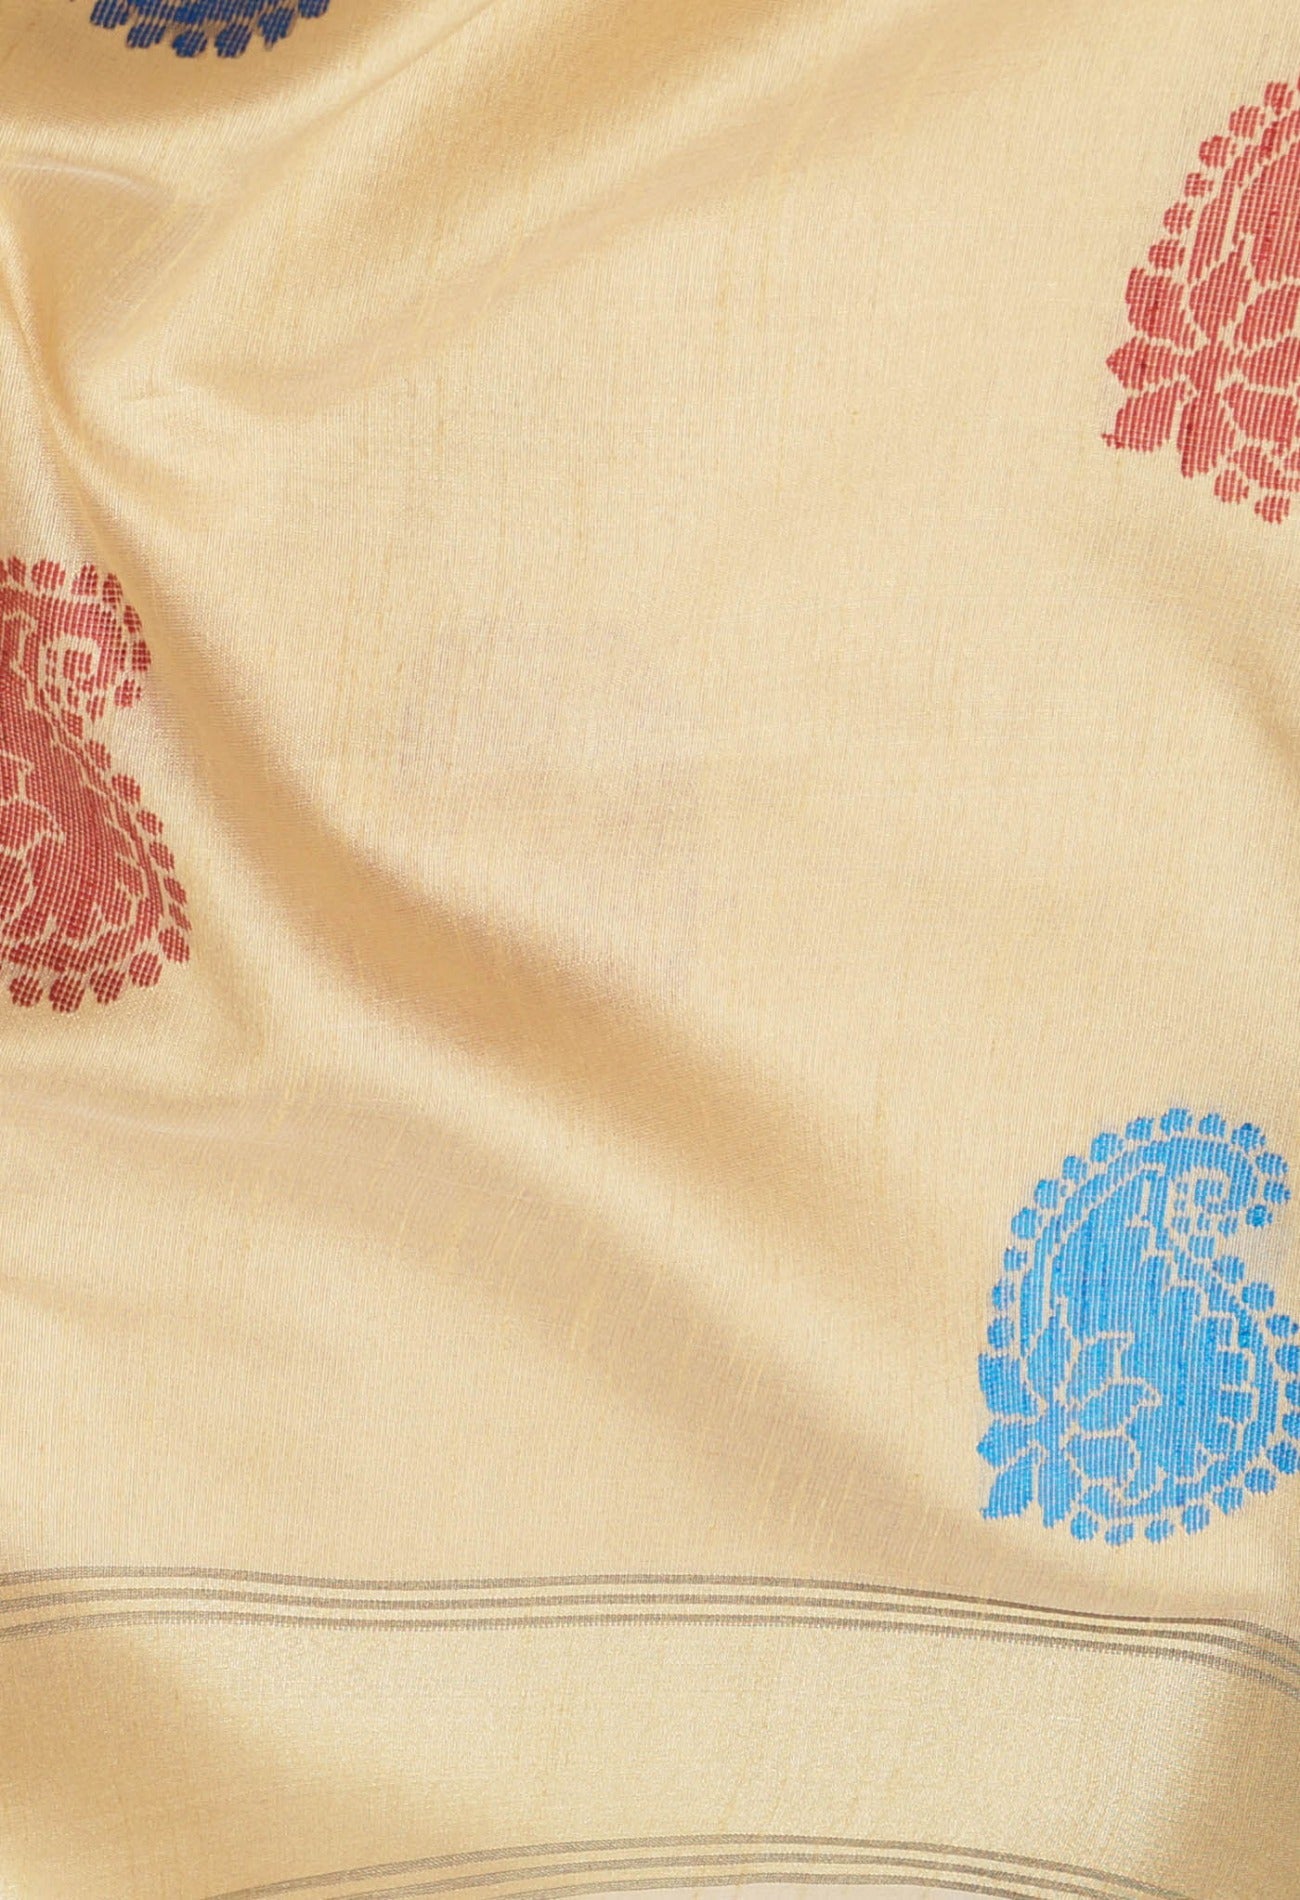 Brown  Bengal Linen Saree-UNM61761